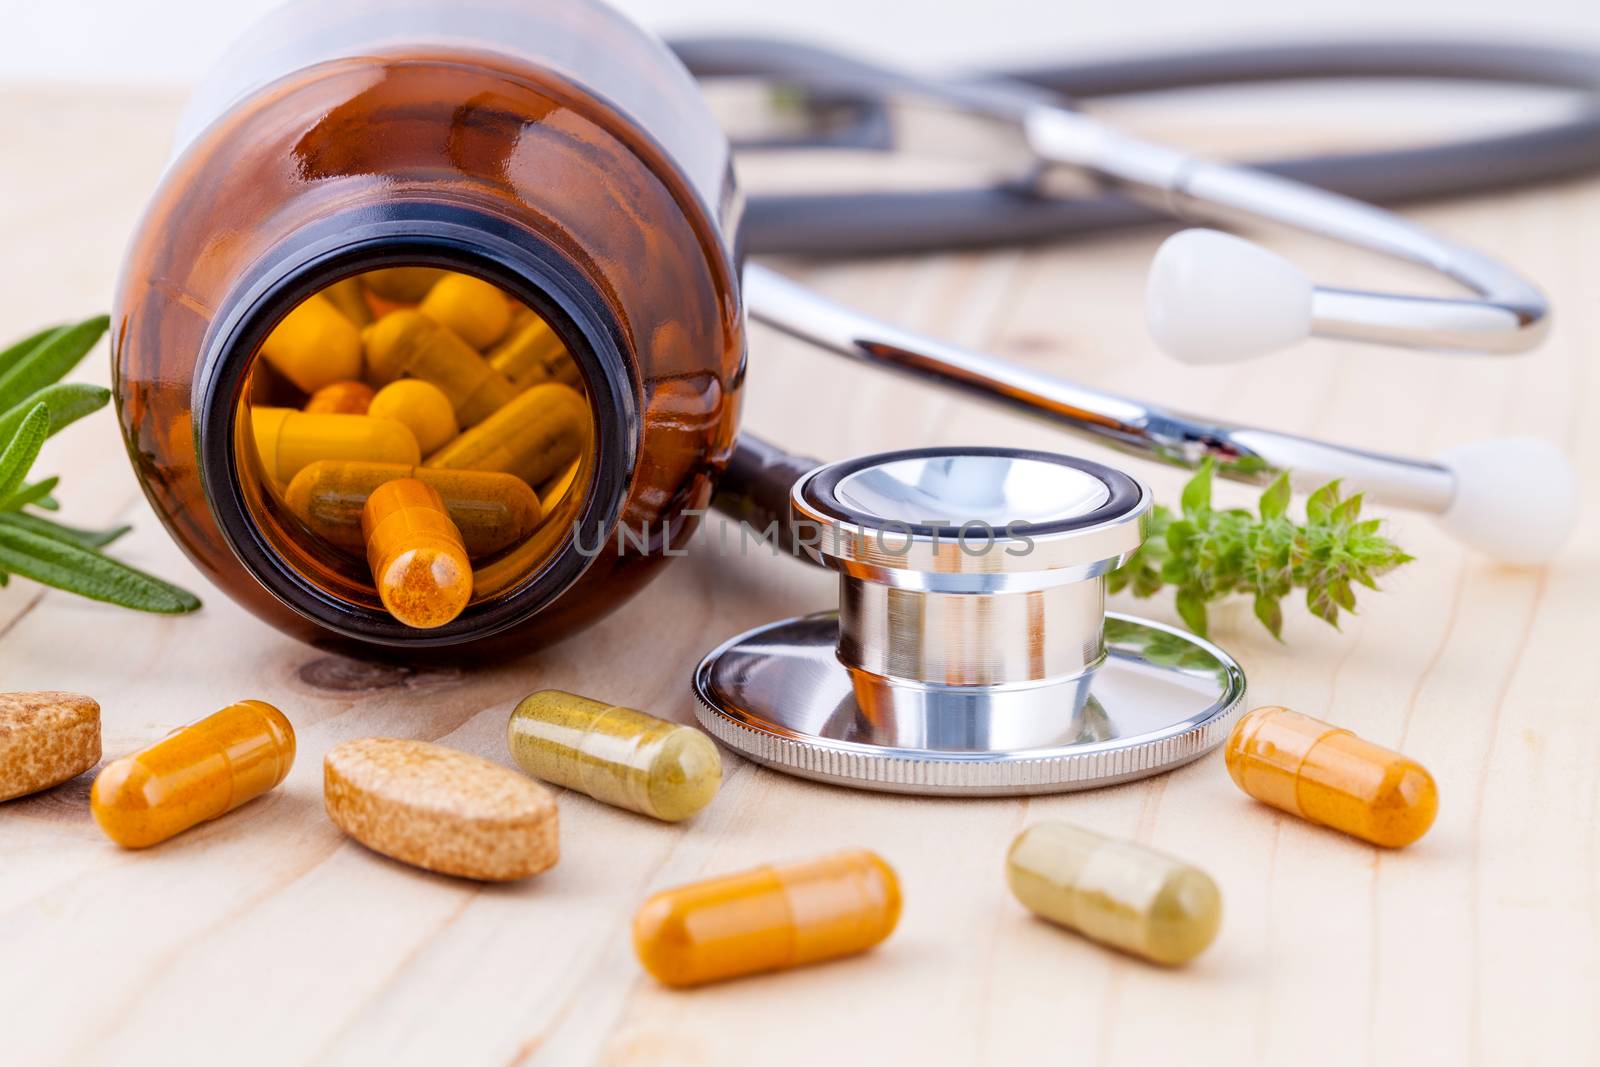 capsule of herbal medicine alternative healthy care with stethos by kerdkanno